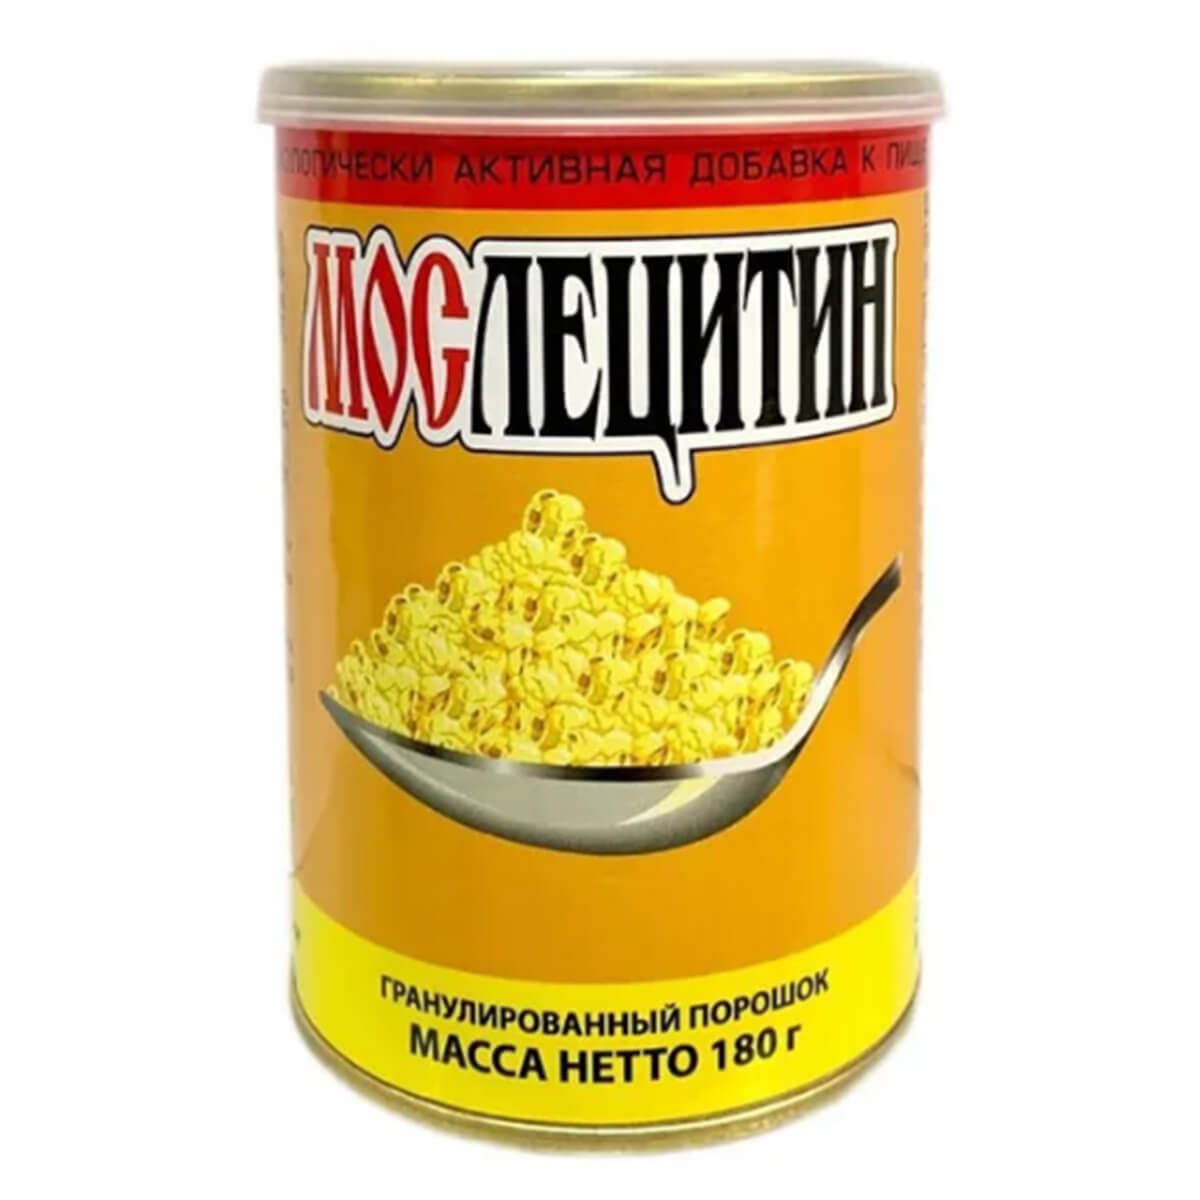 Лецитин «Мослецитин», 180 г, Витапром